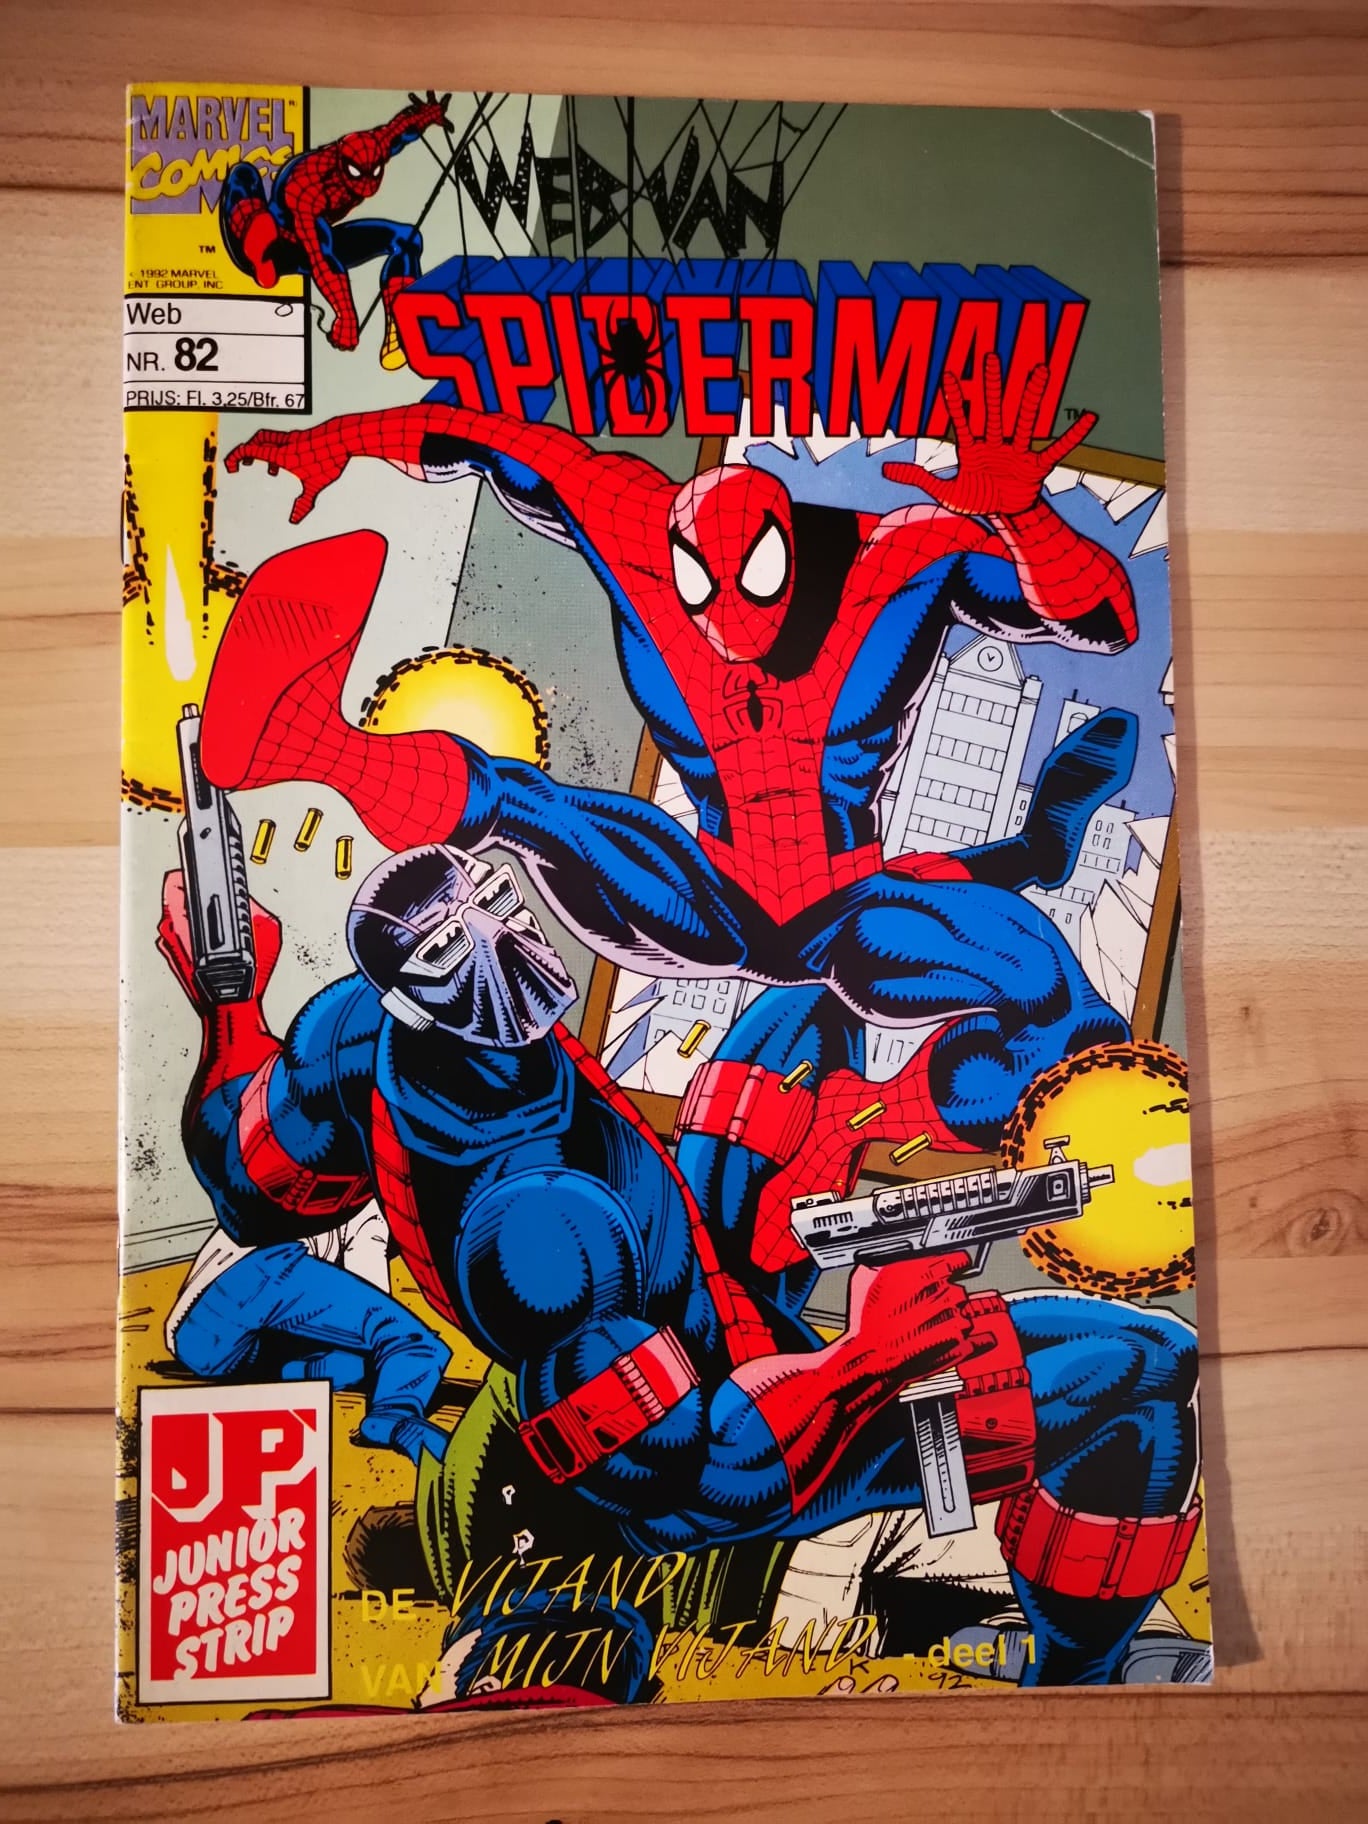 Web van spiderman #82